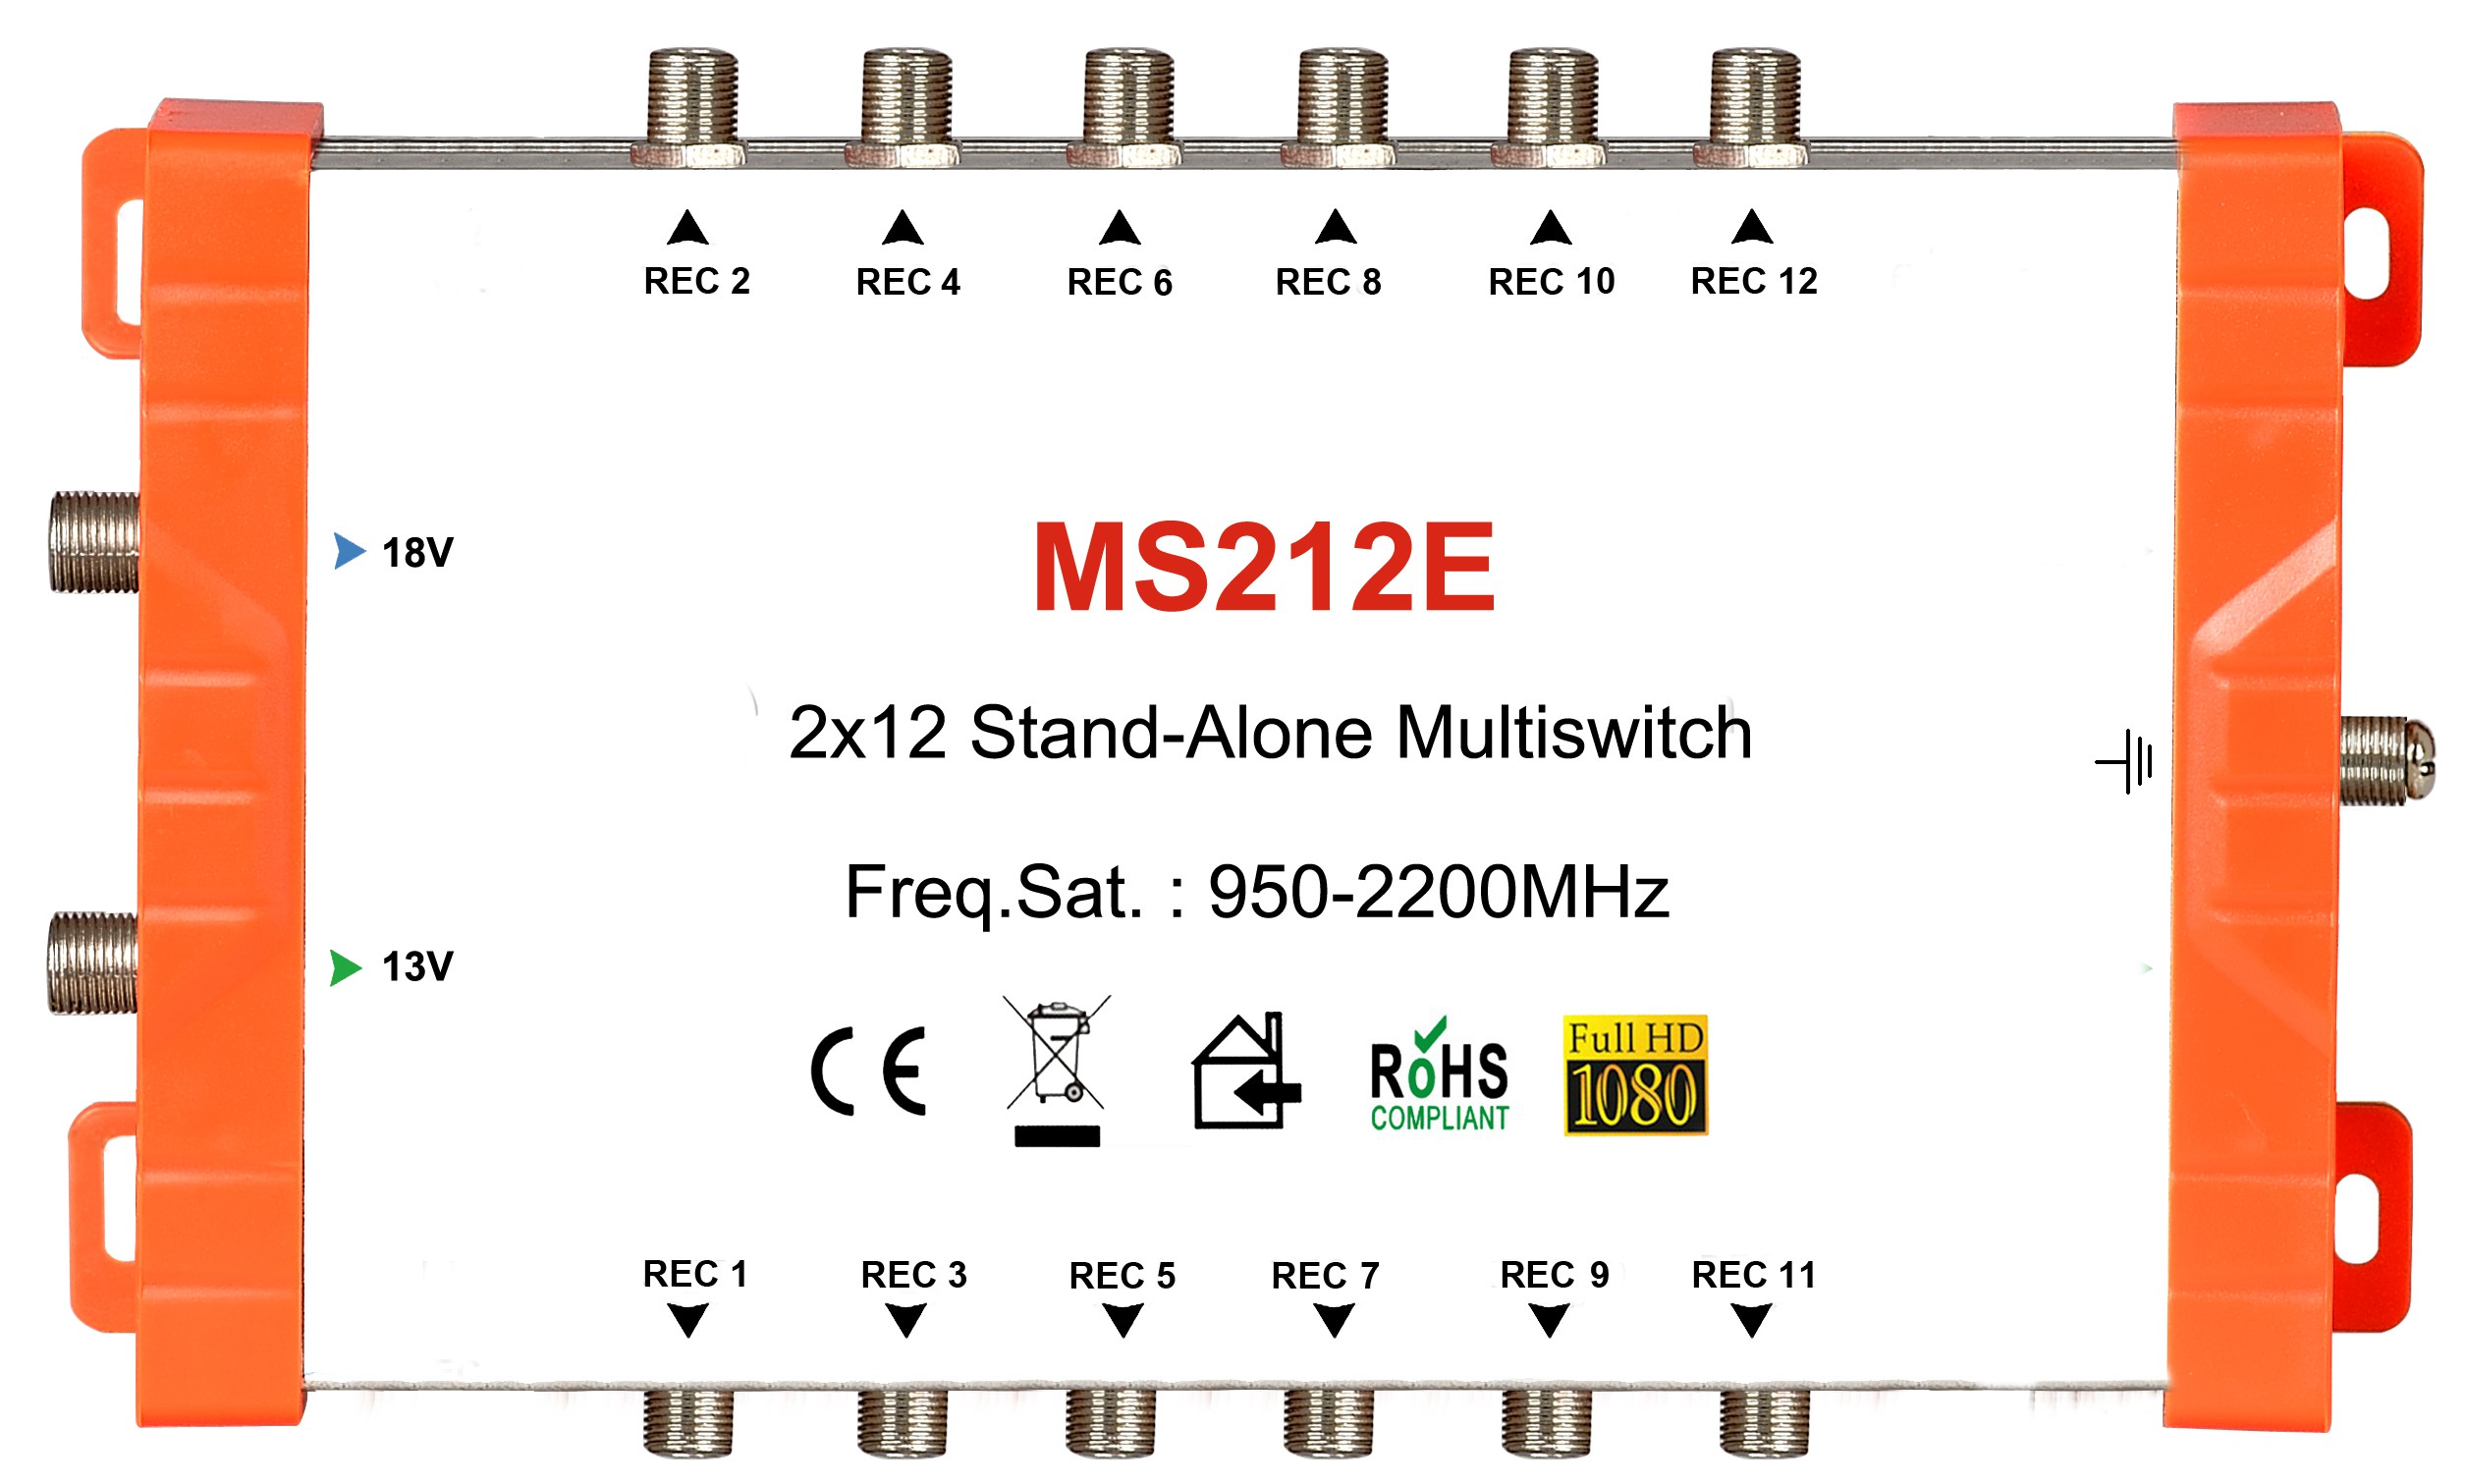 2x12 satellite multi-switch, Stand-Alone multiswitch